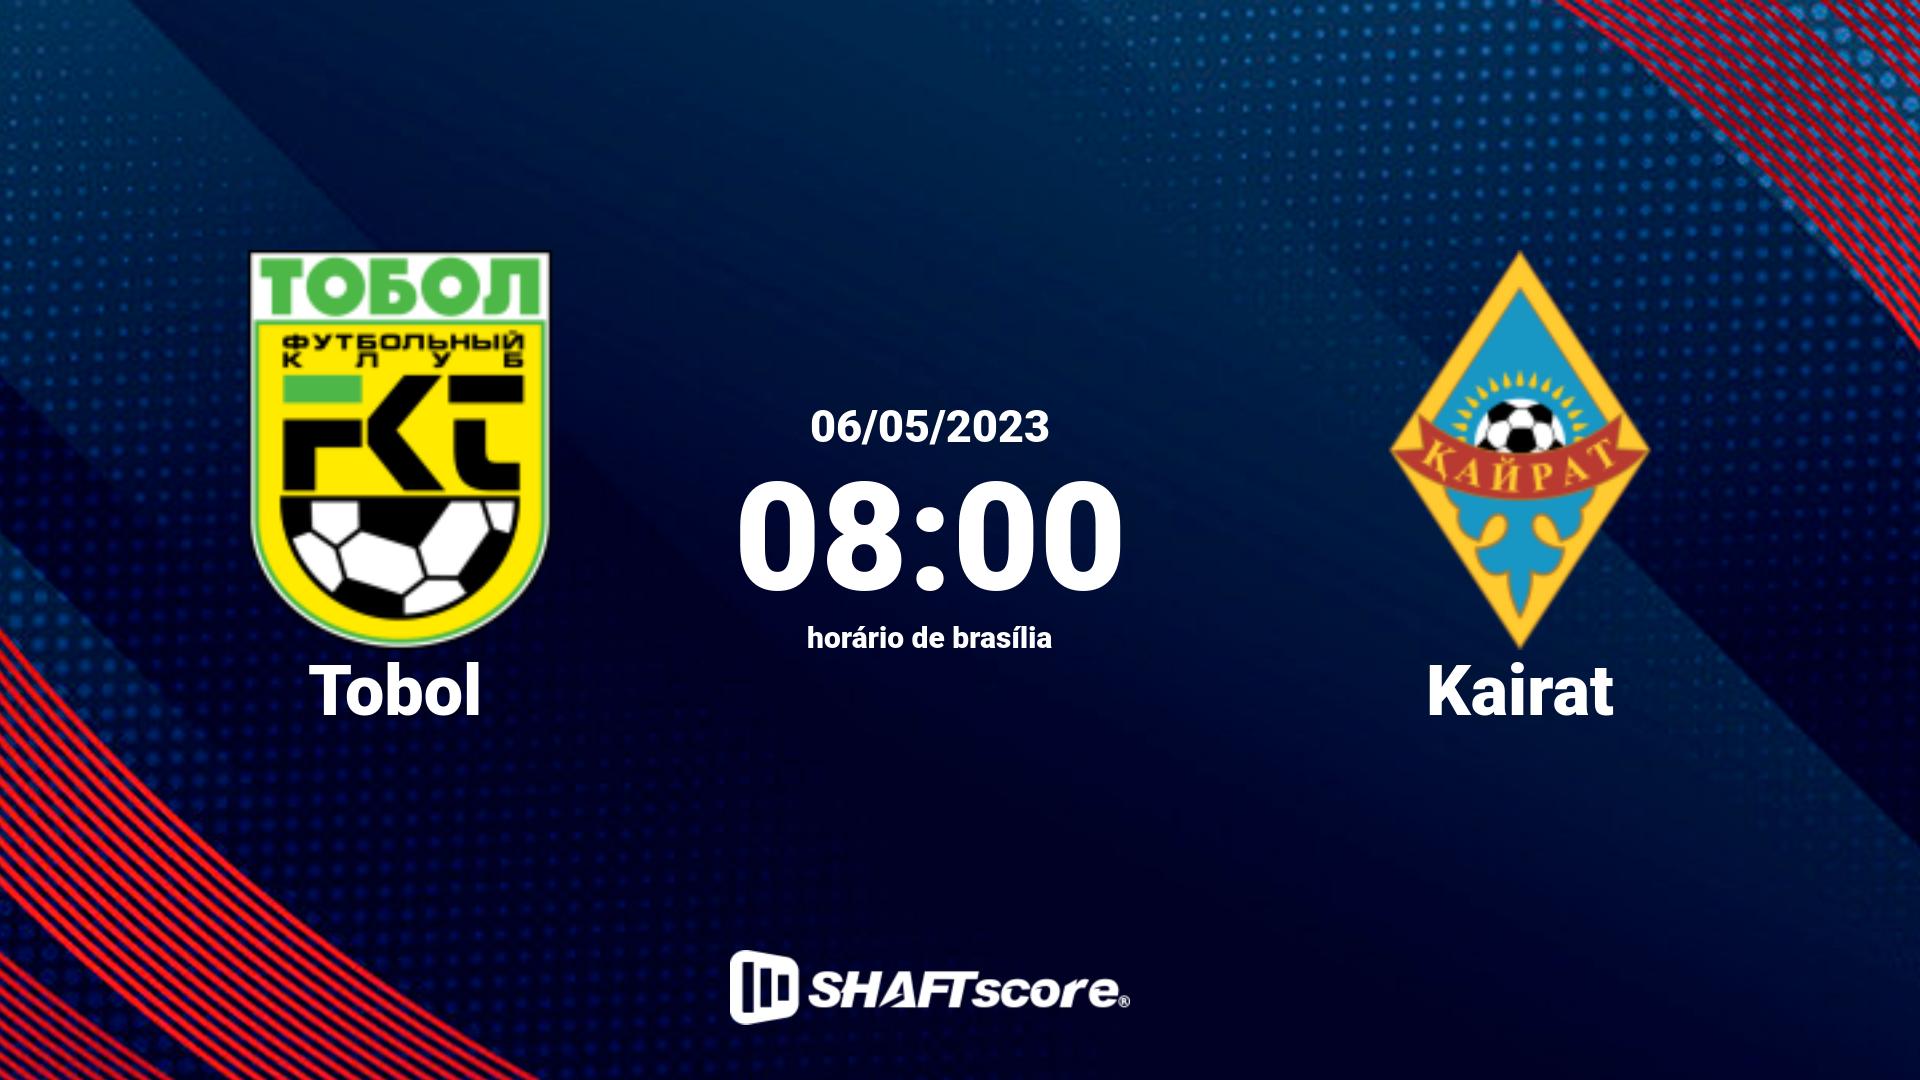 Estatísticas do jogo Tobol vs Kairat 06.05 08:00